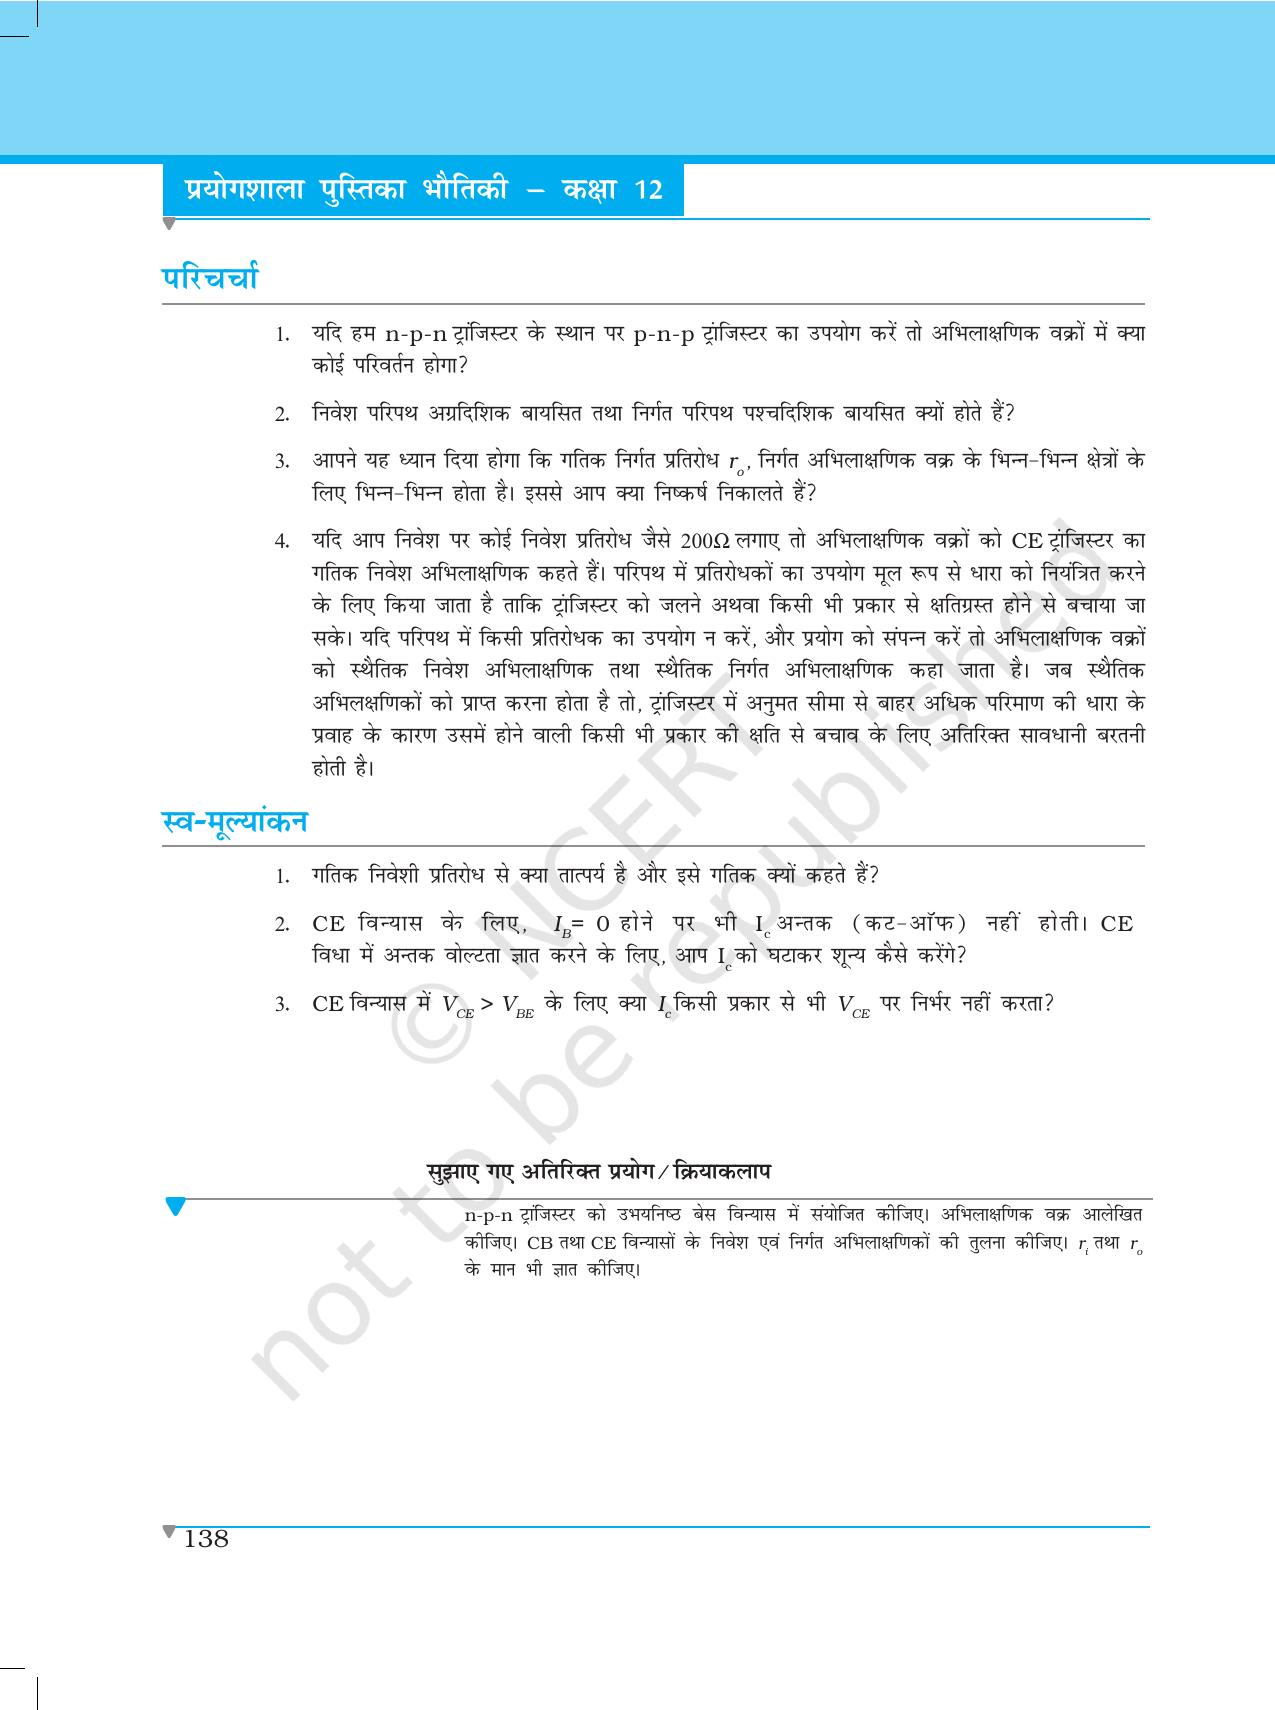 NCERT Laboratory Manuals for Class XII भौतिकी - प्रयोग (14 - 18) - Page 34